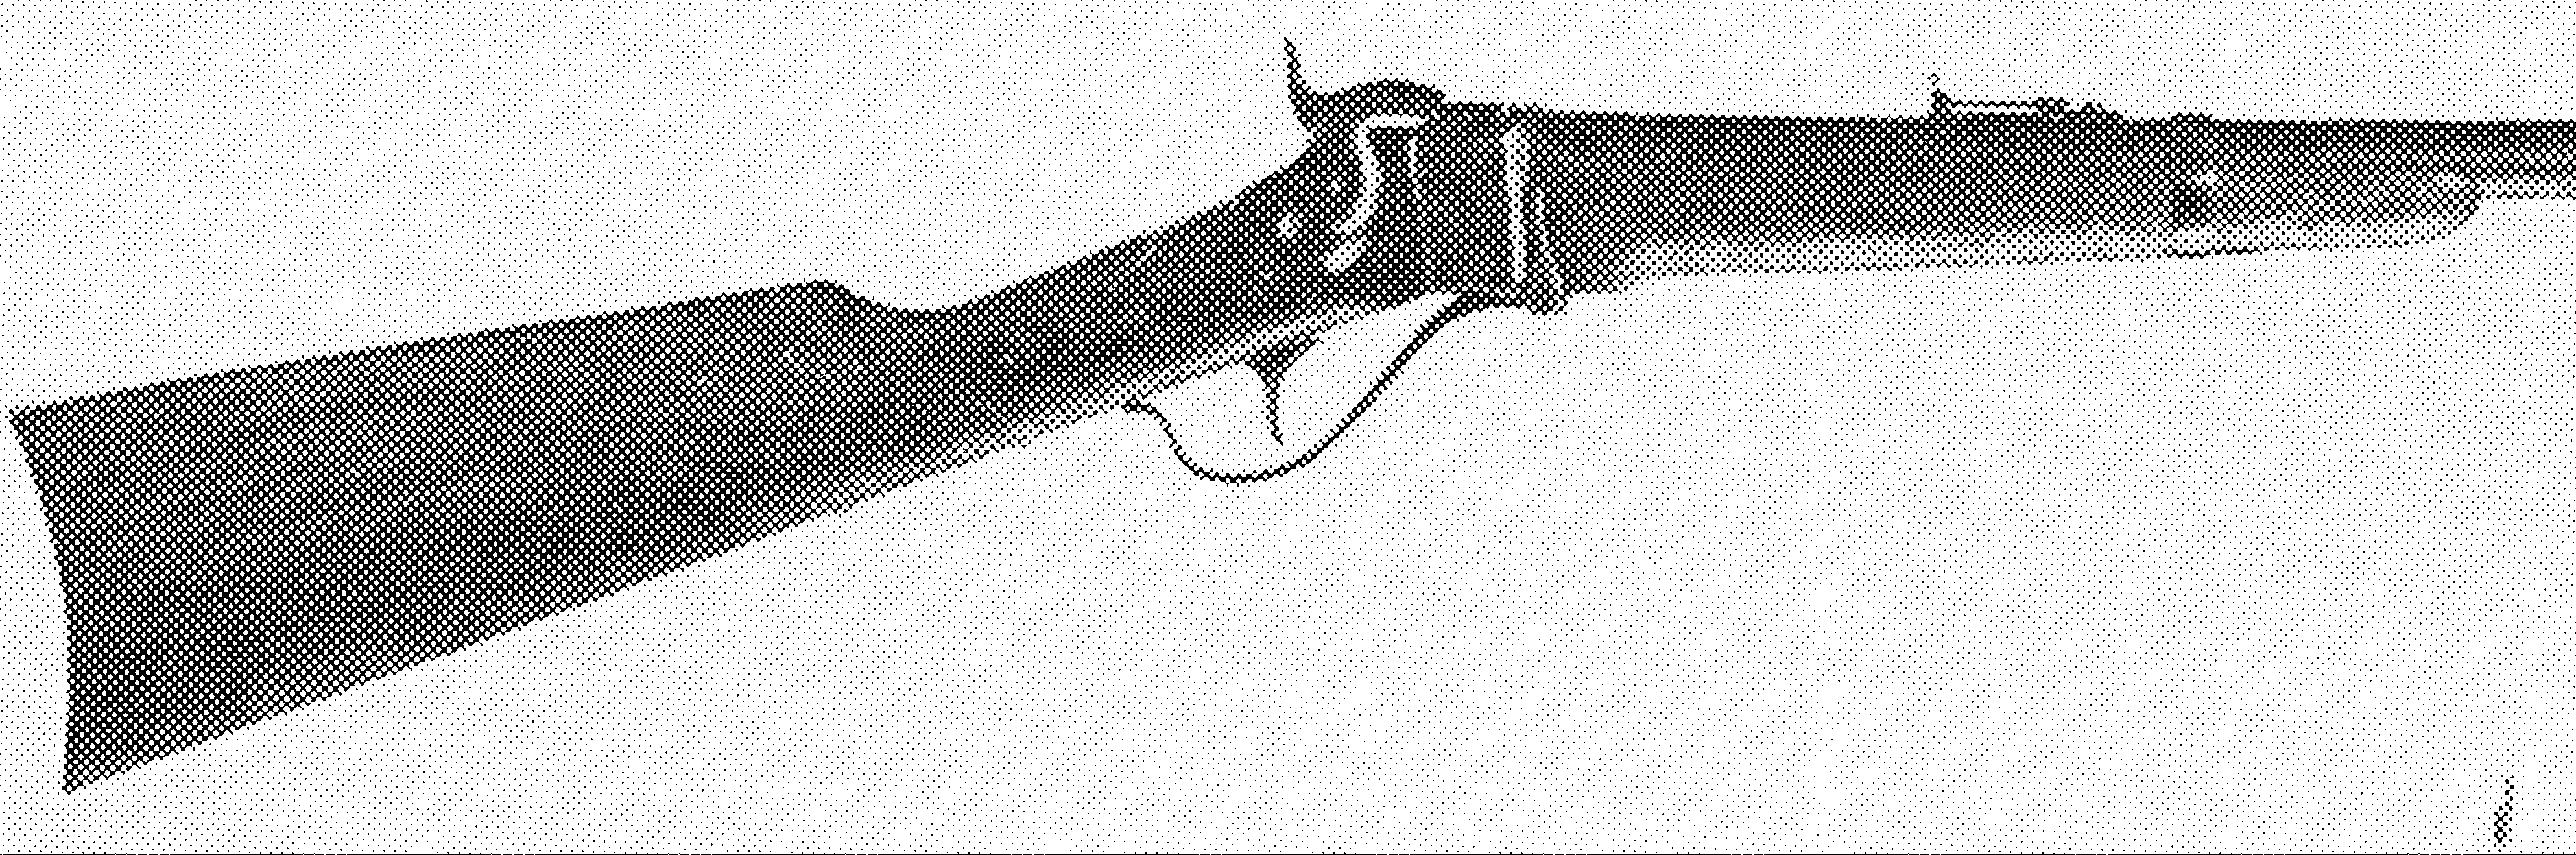 Model 1874 Military Carbine